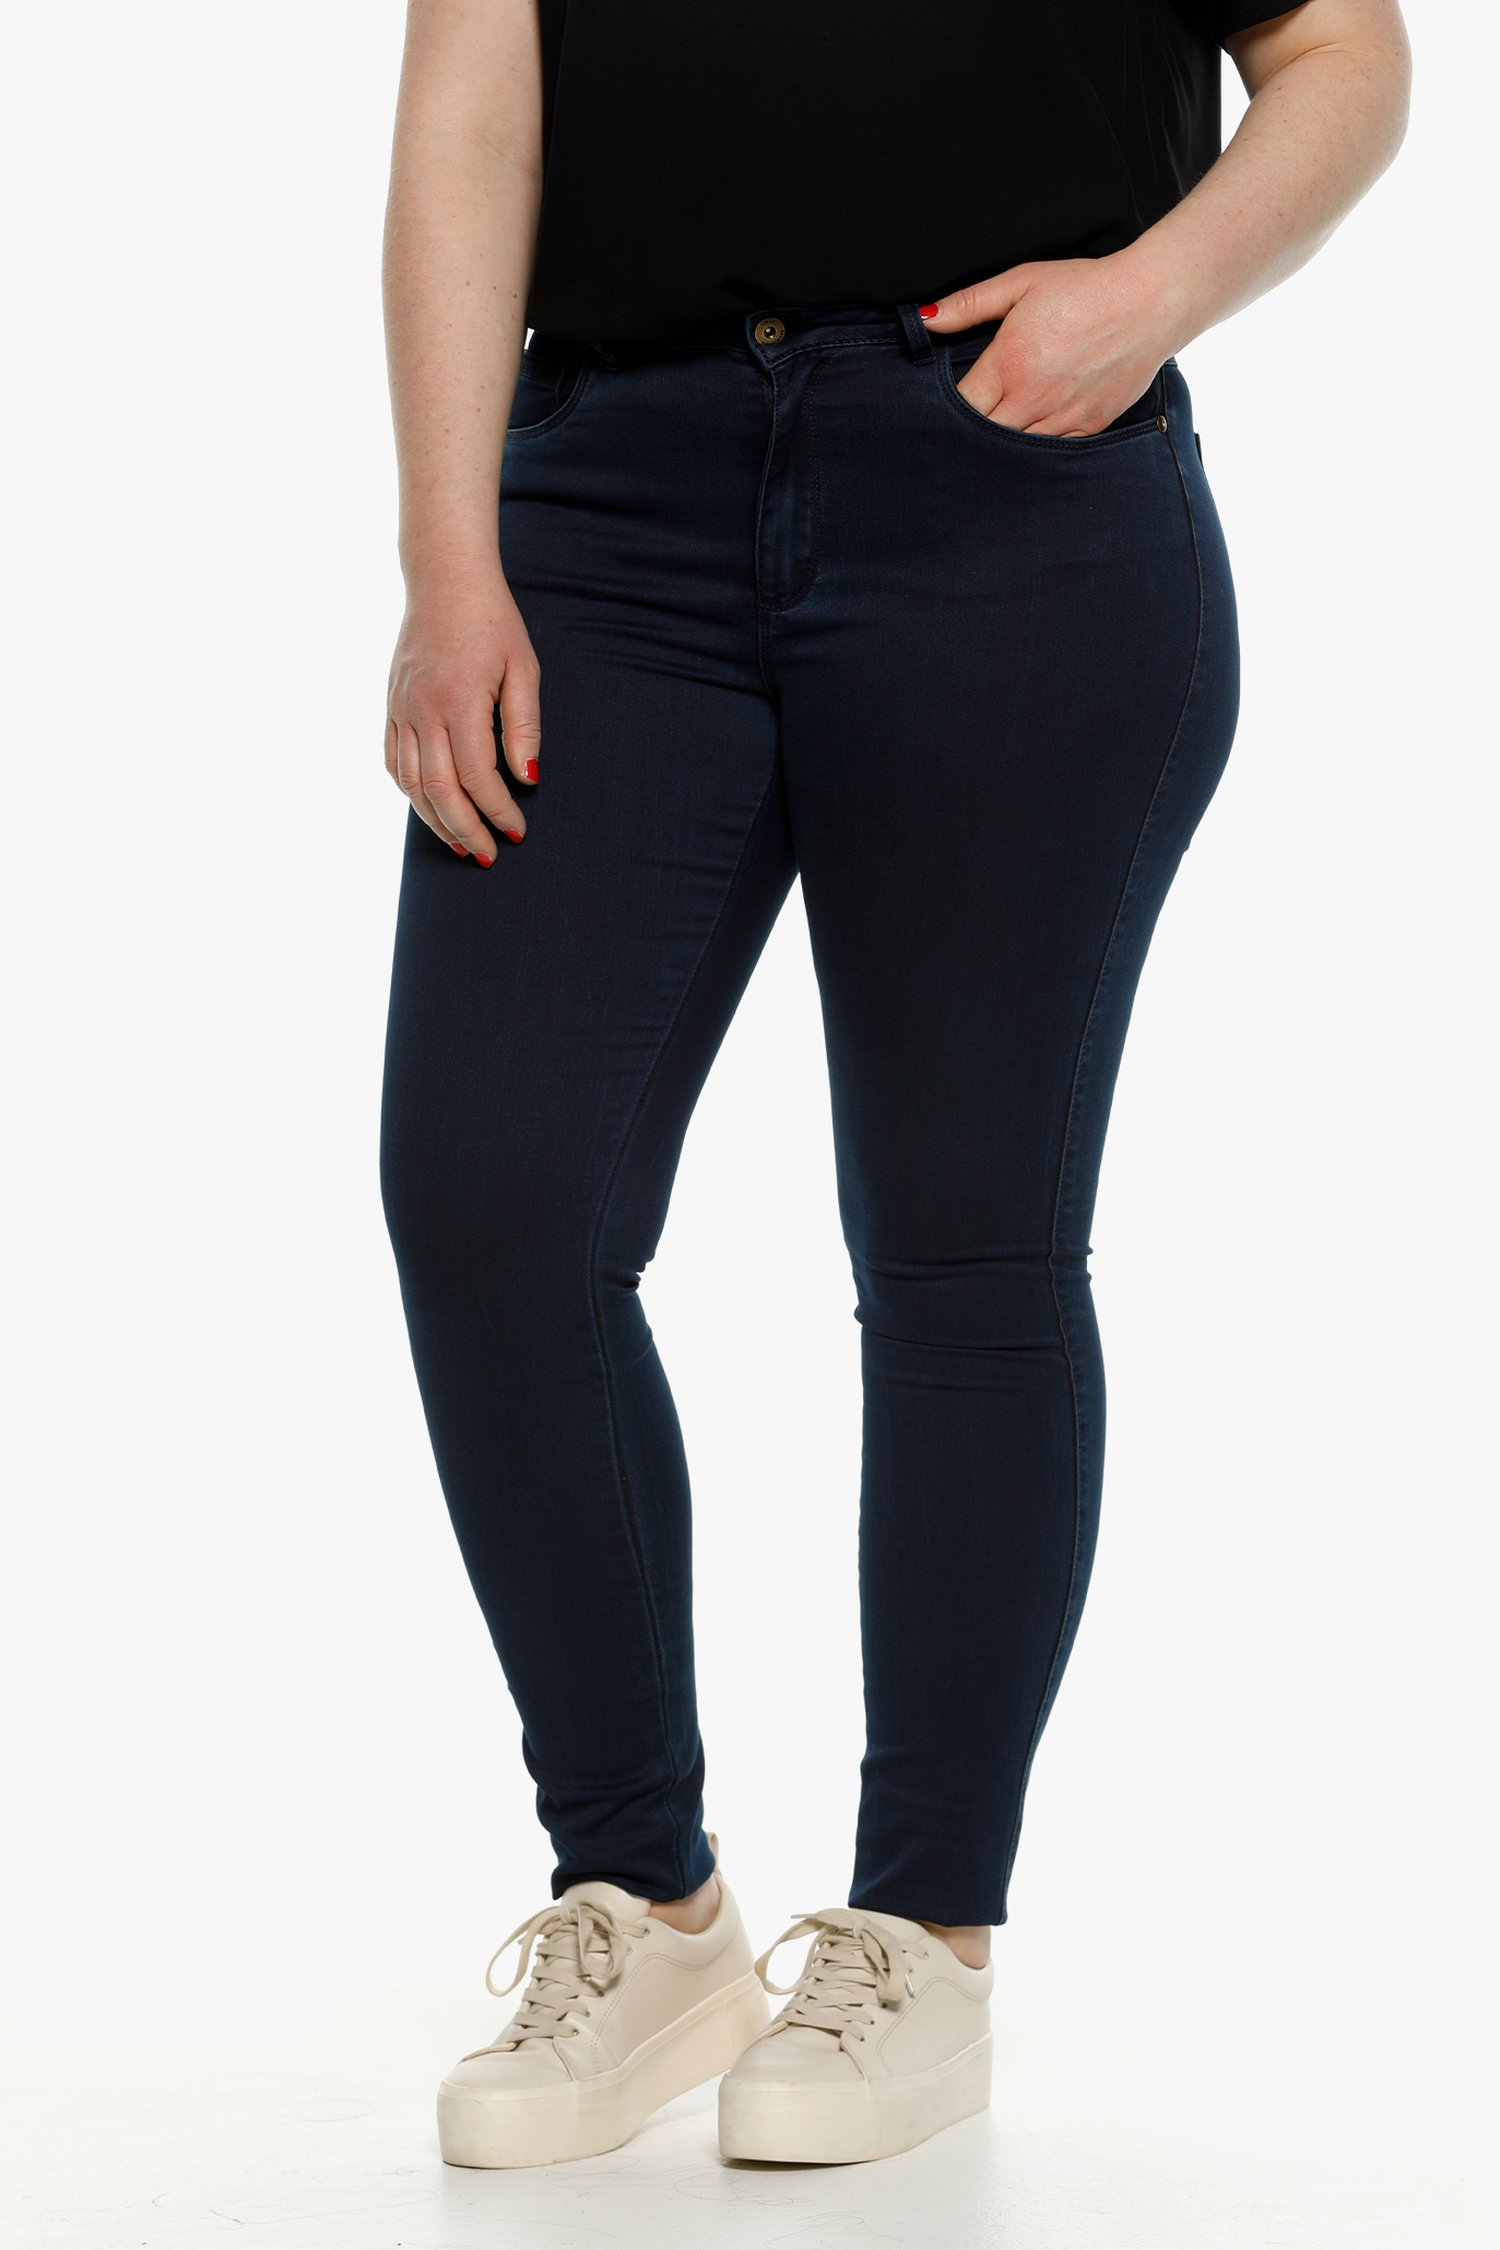 onderdelen Sluit een verzekering af passen Donkerblauwe high waist jeans - skinny fit van Only Carmakoma | 9398387 | e5